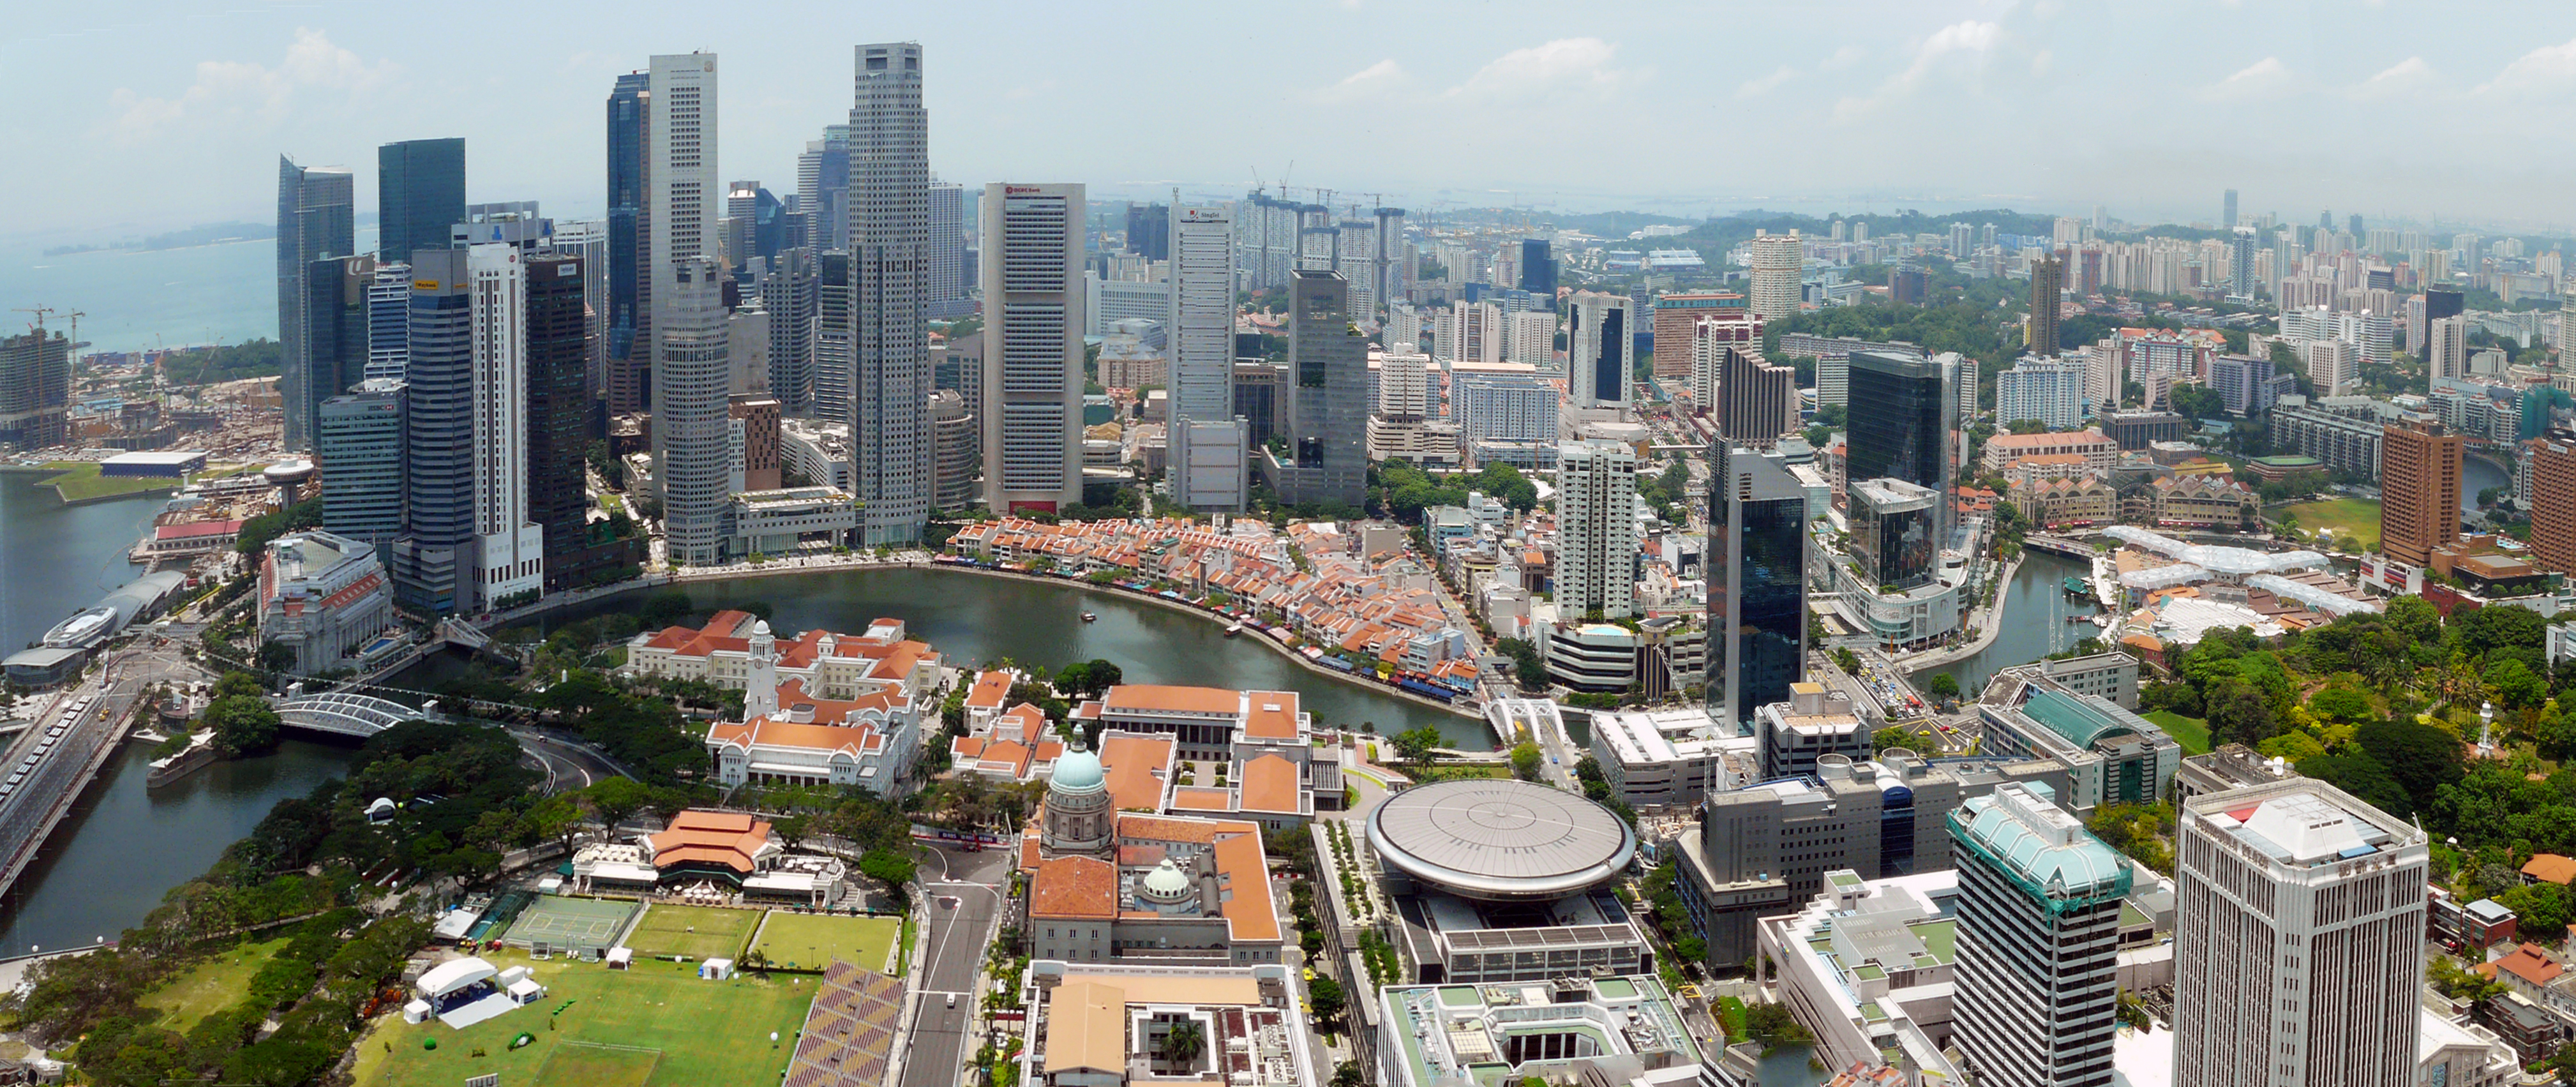 File:1 Singapore city skyline 2010 day panorama.jpg - Wikipedia, the ...